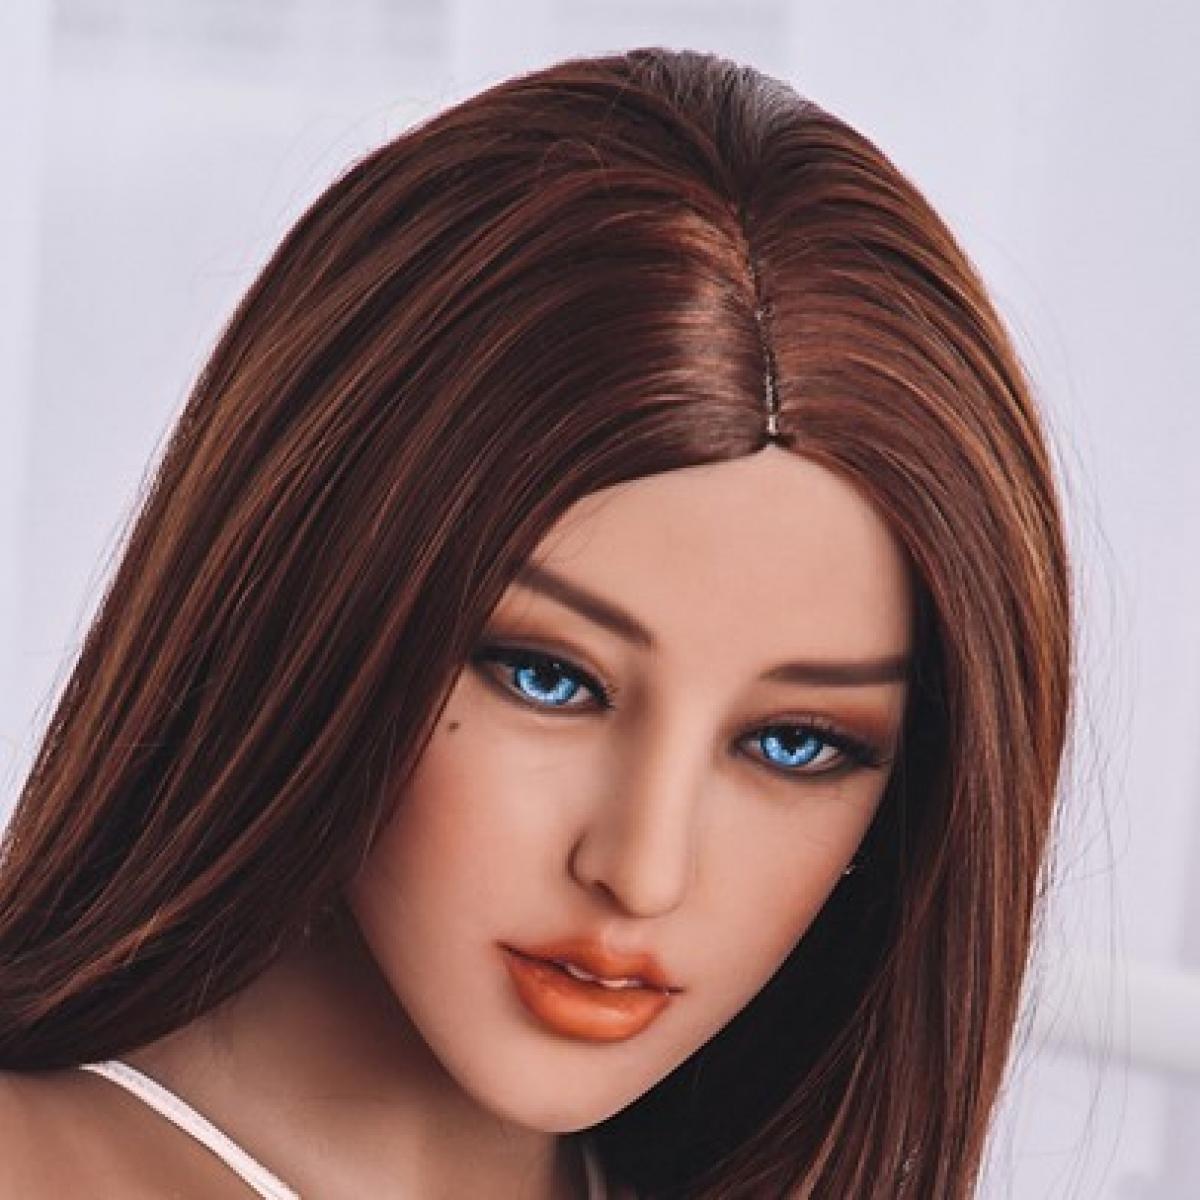 Neodoll Racy Cecelia Head - Sex Doll Head - M16 Compatible – Brown